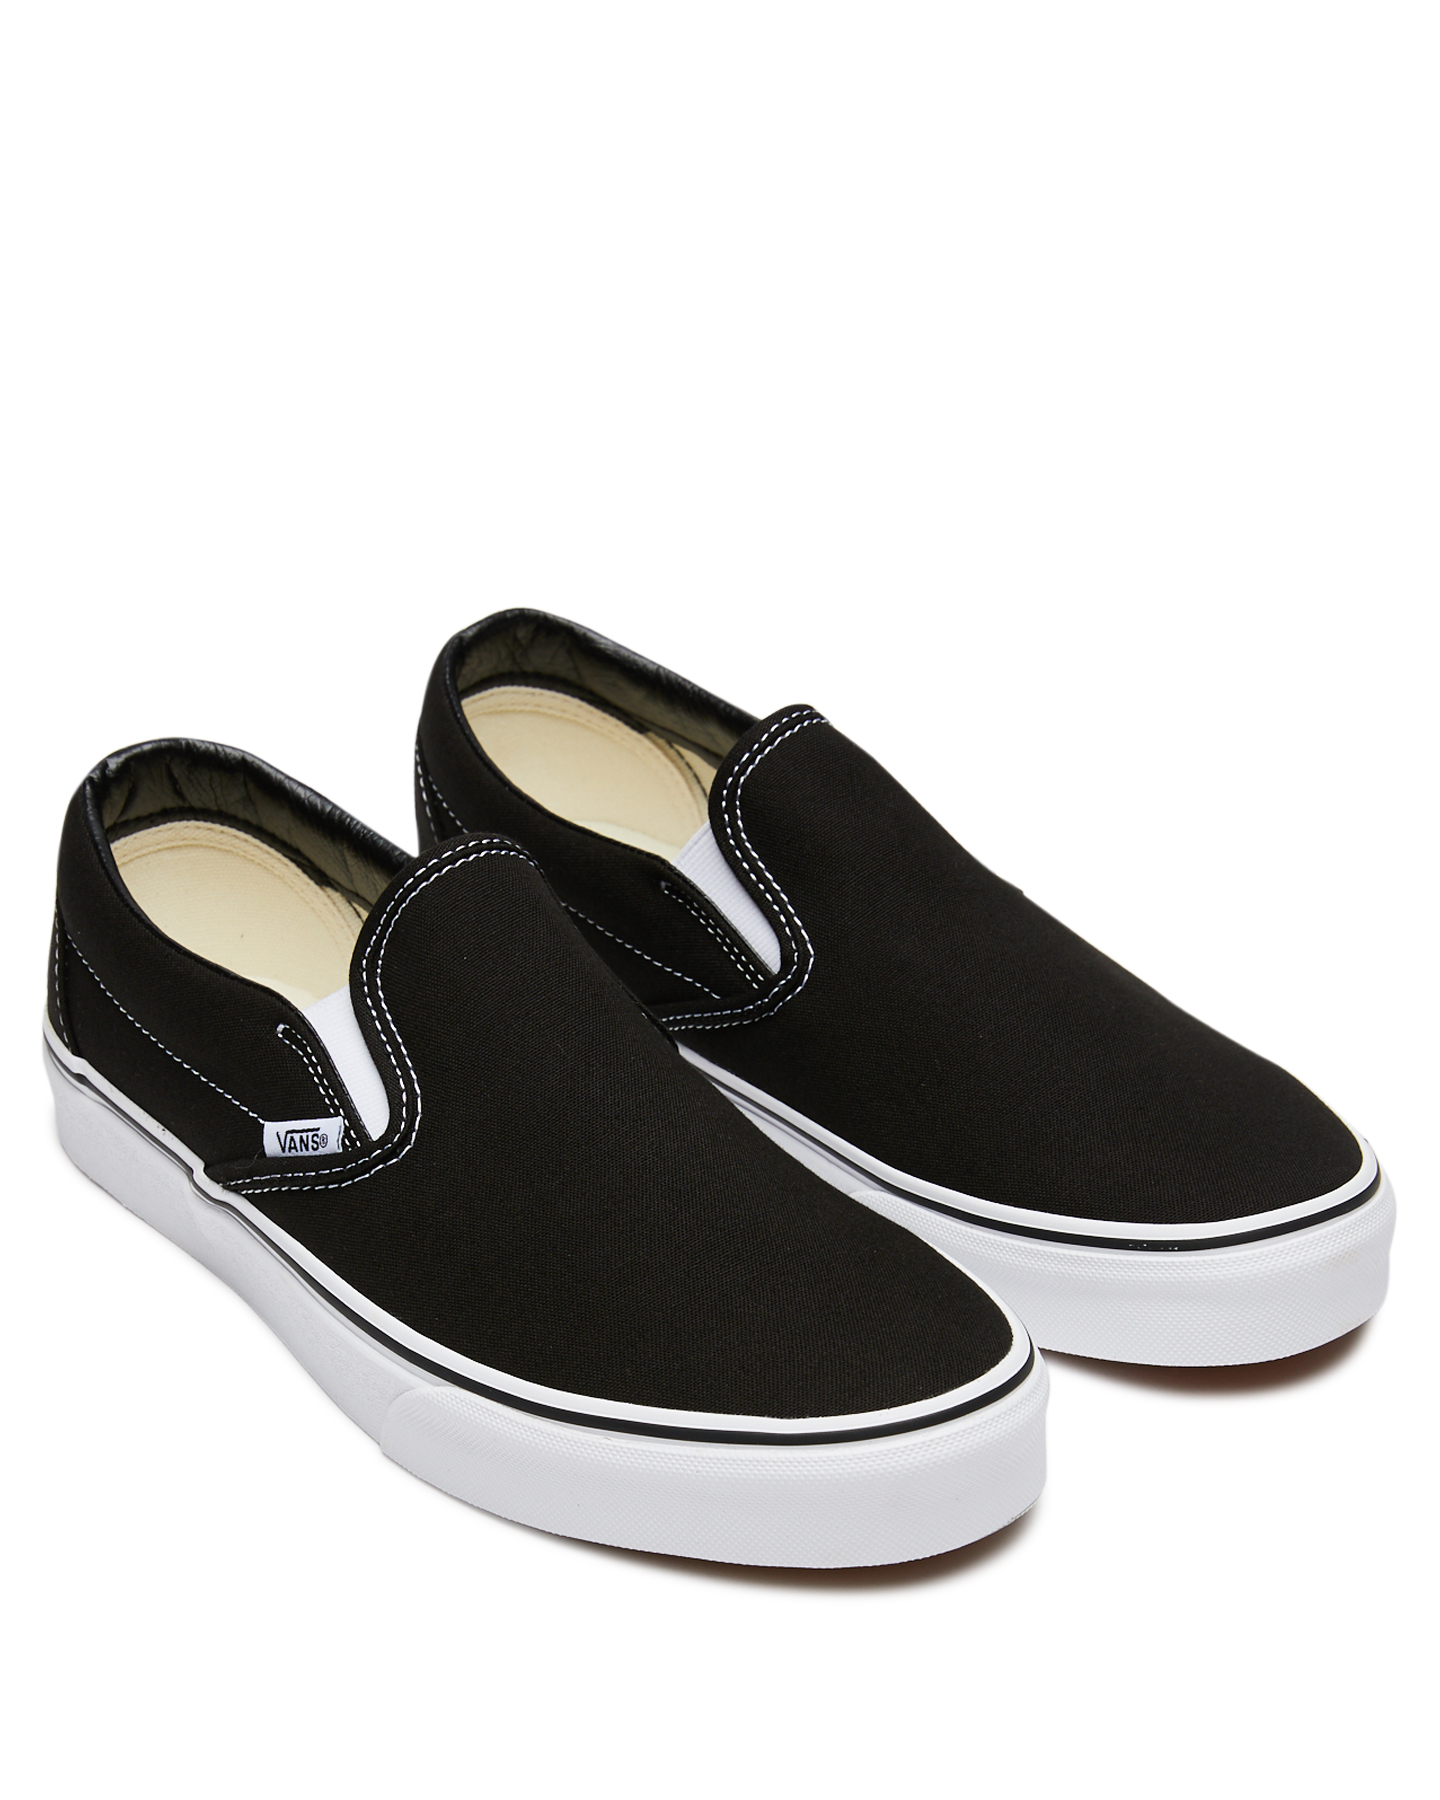 Vans Mens Classic Slip On Shoe - Black | SurfStitch